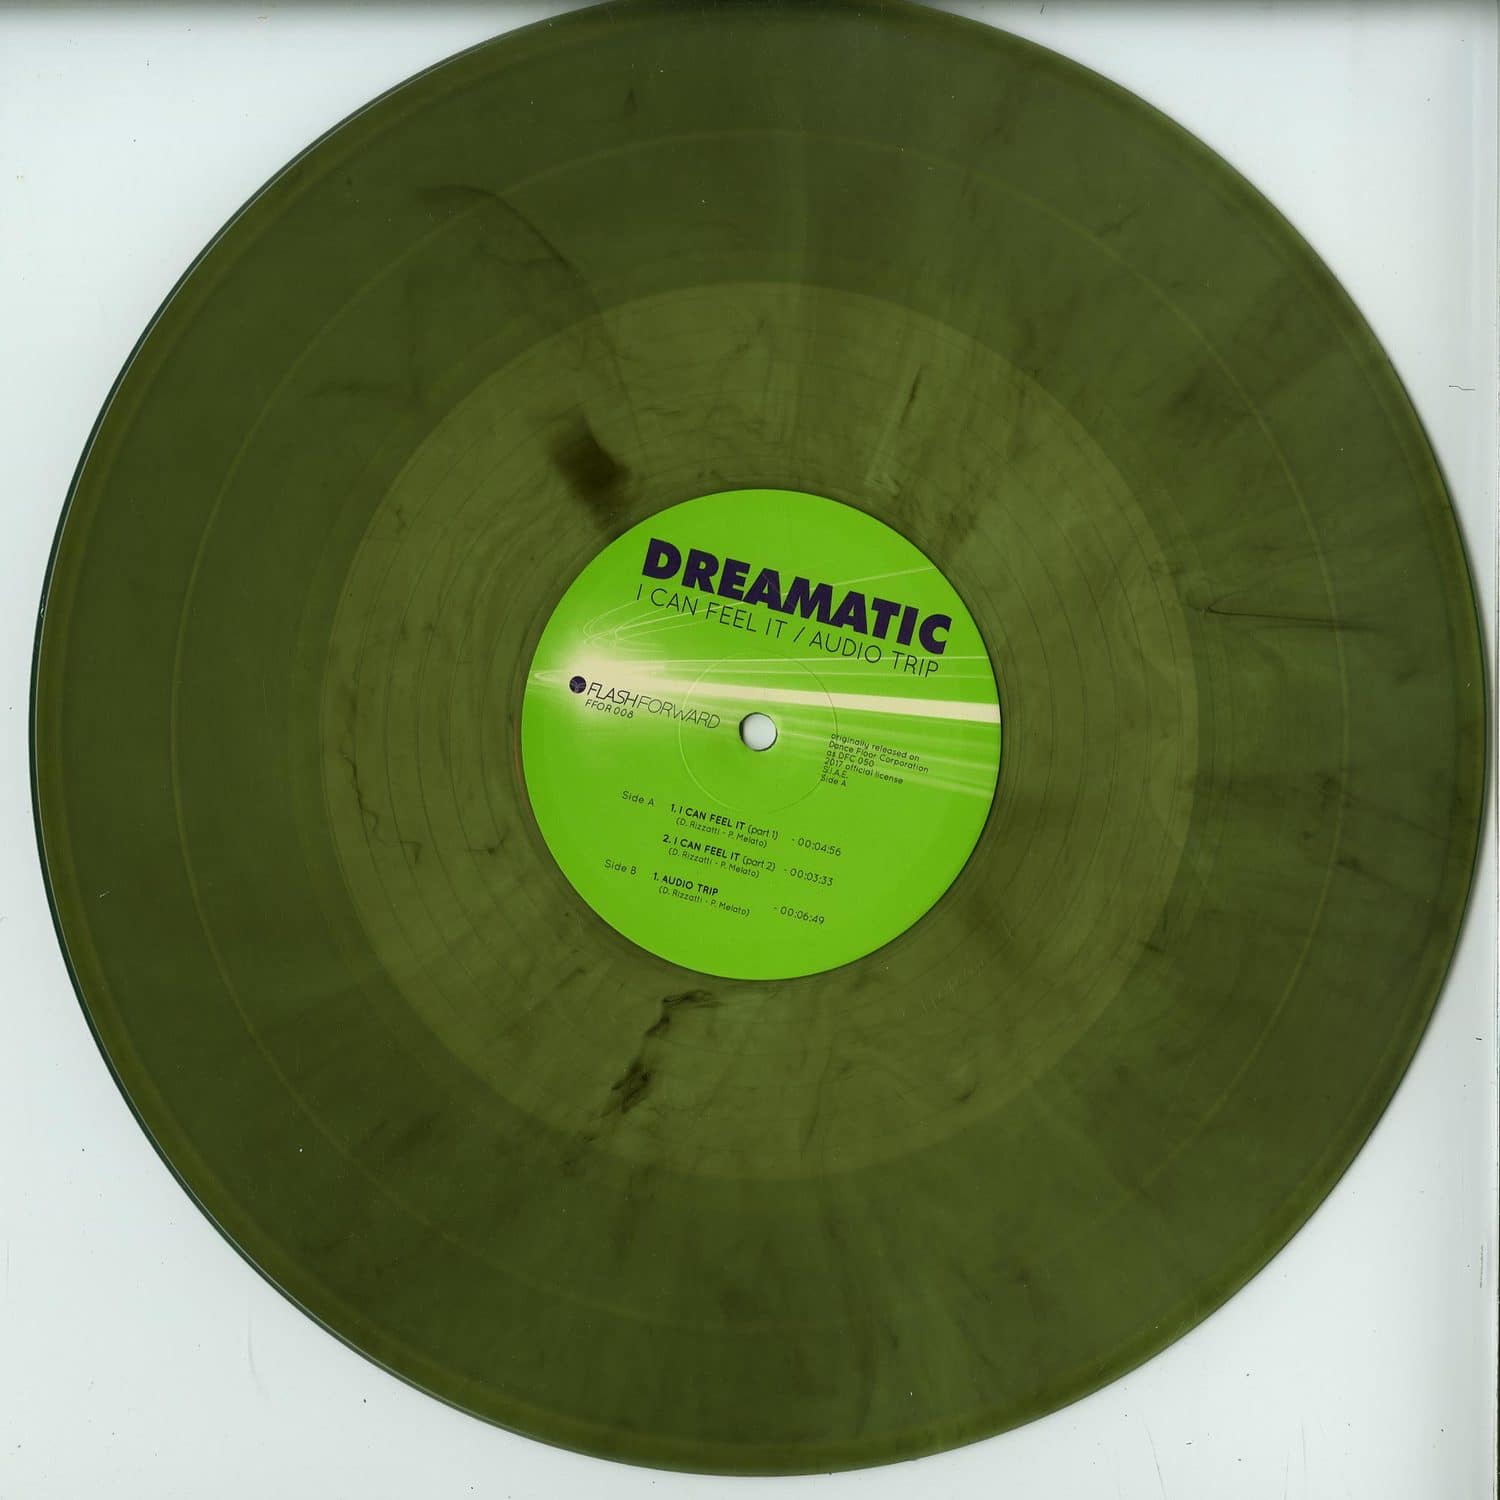 Dreamatic - I CAN FEEL IT / AUDIO TRIP 